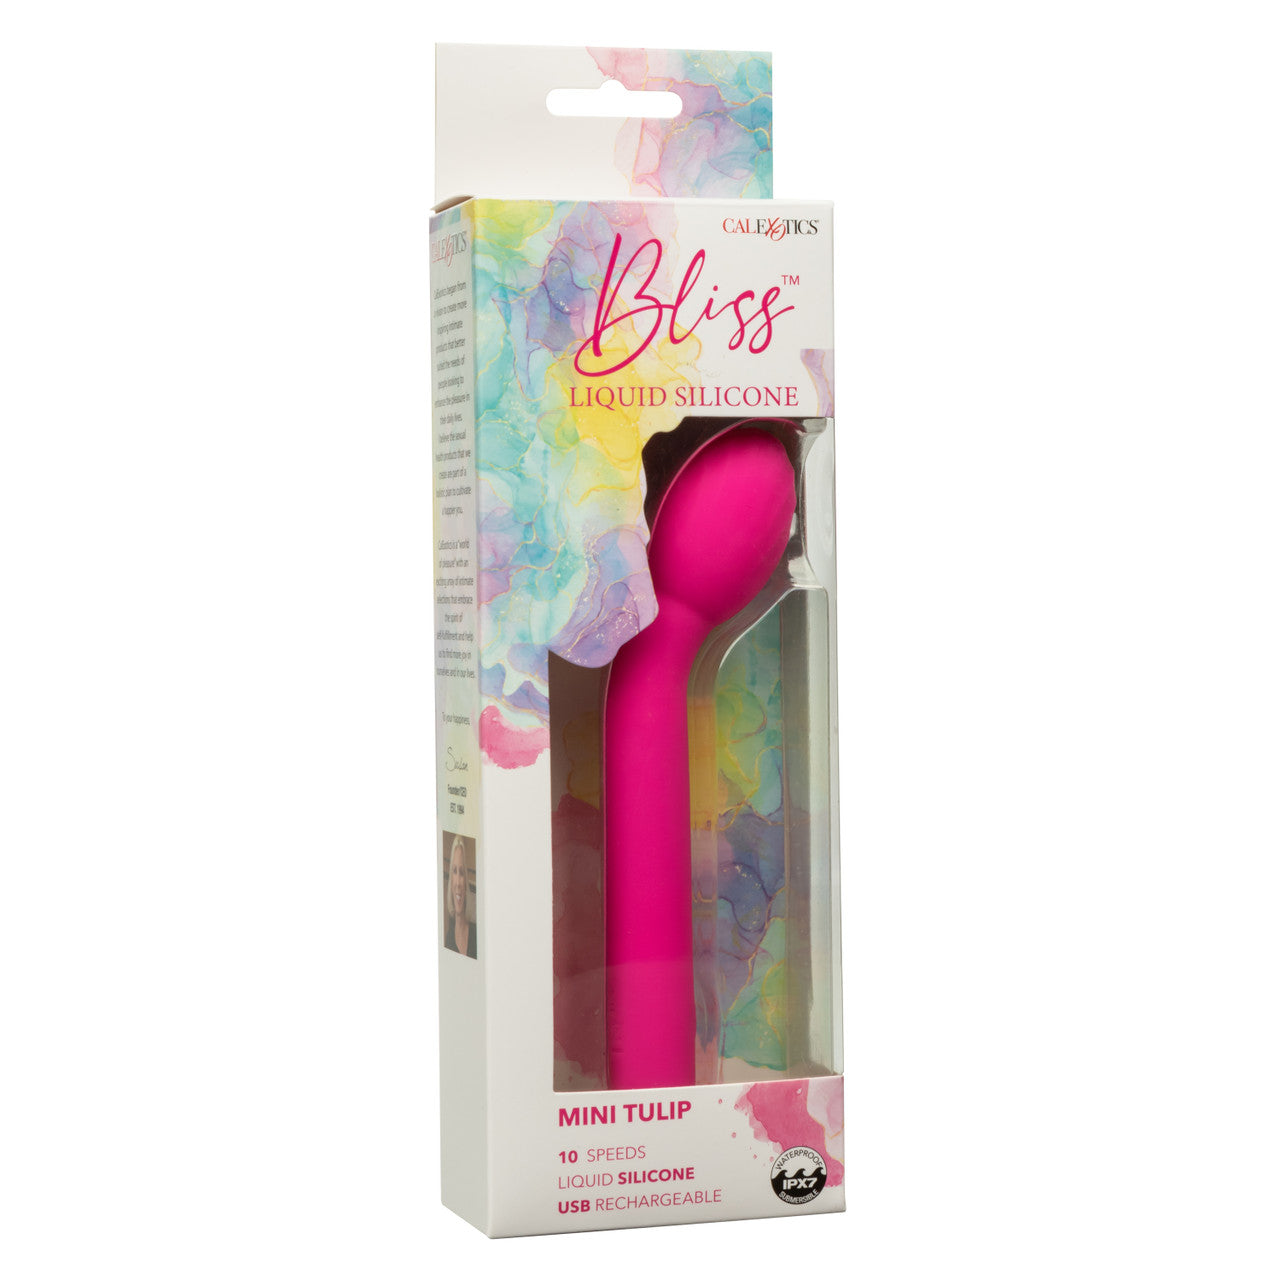 Bliss Liquid Silicone Mini Tulip Stimulator